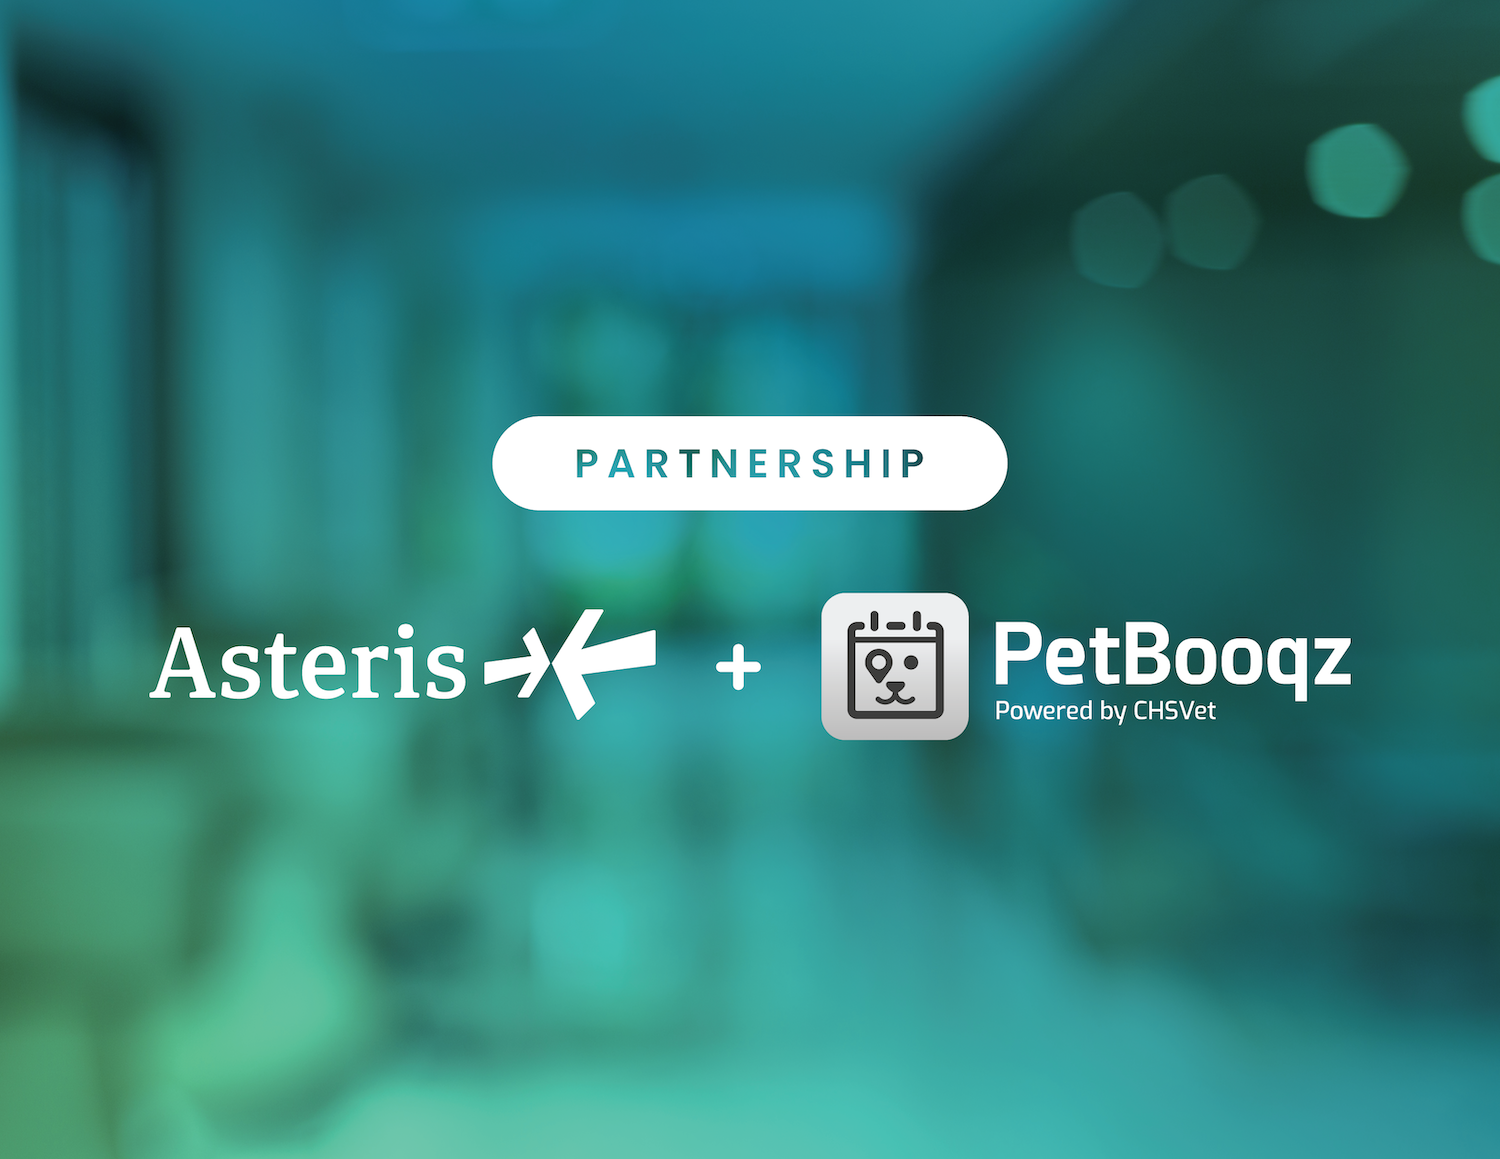 Asteris Partners with PetBooqz